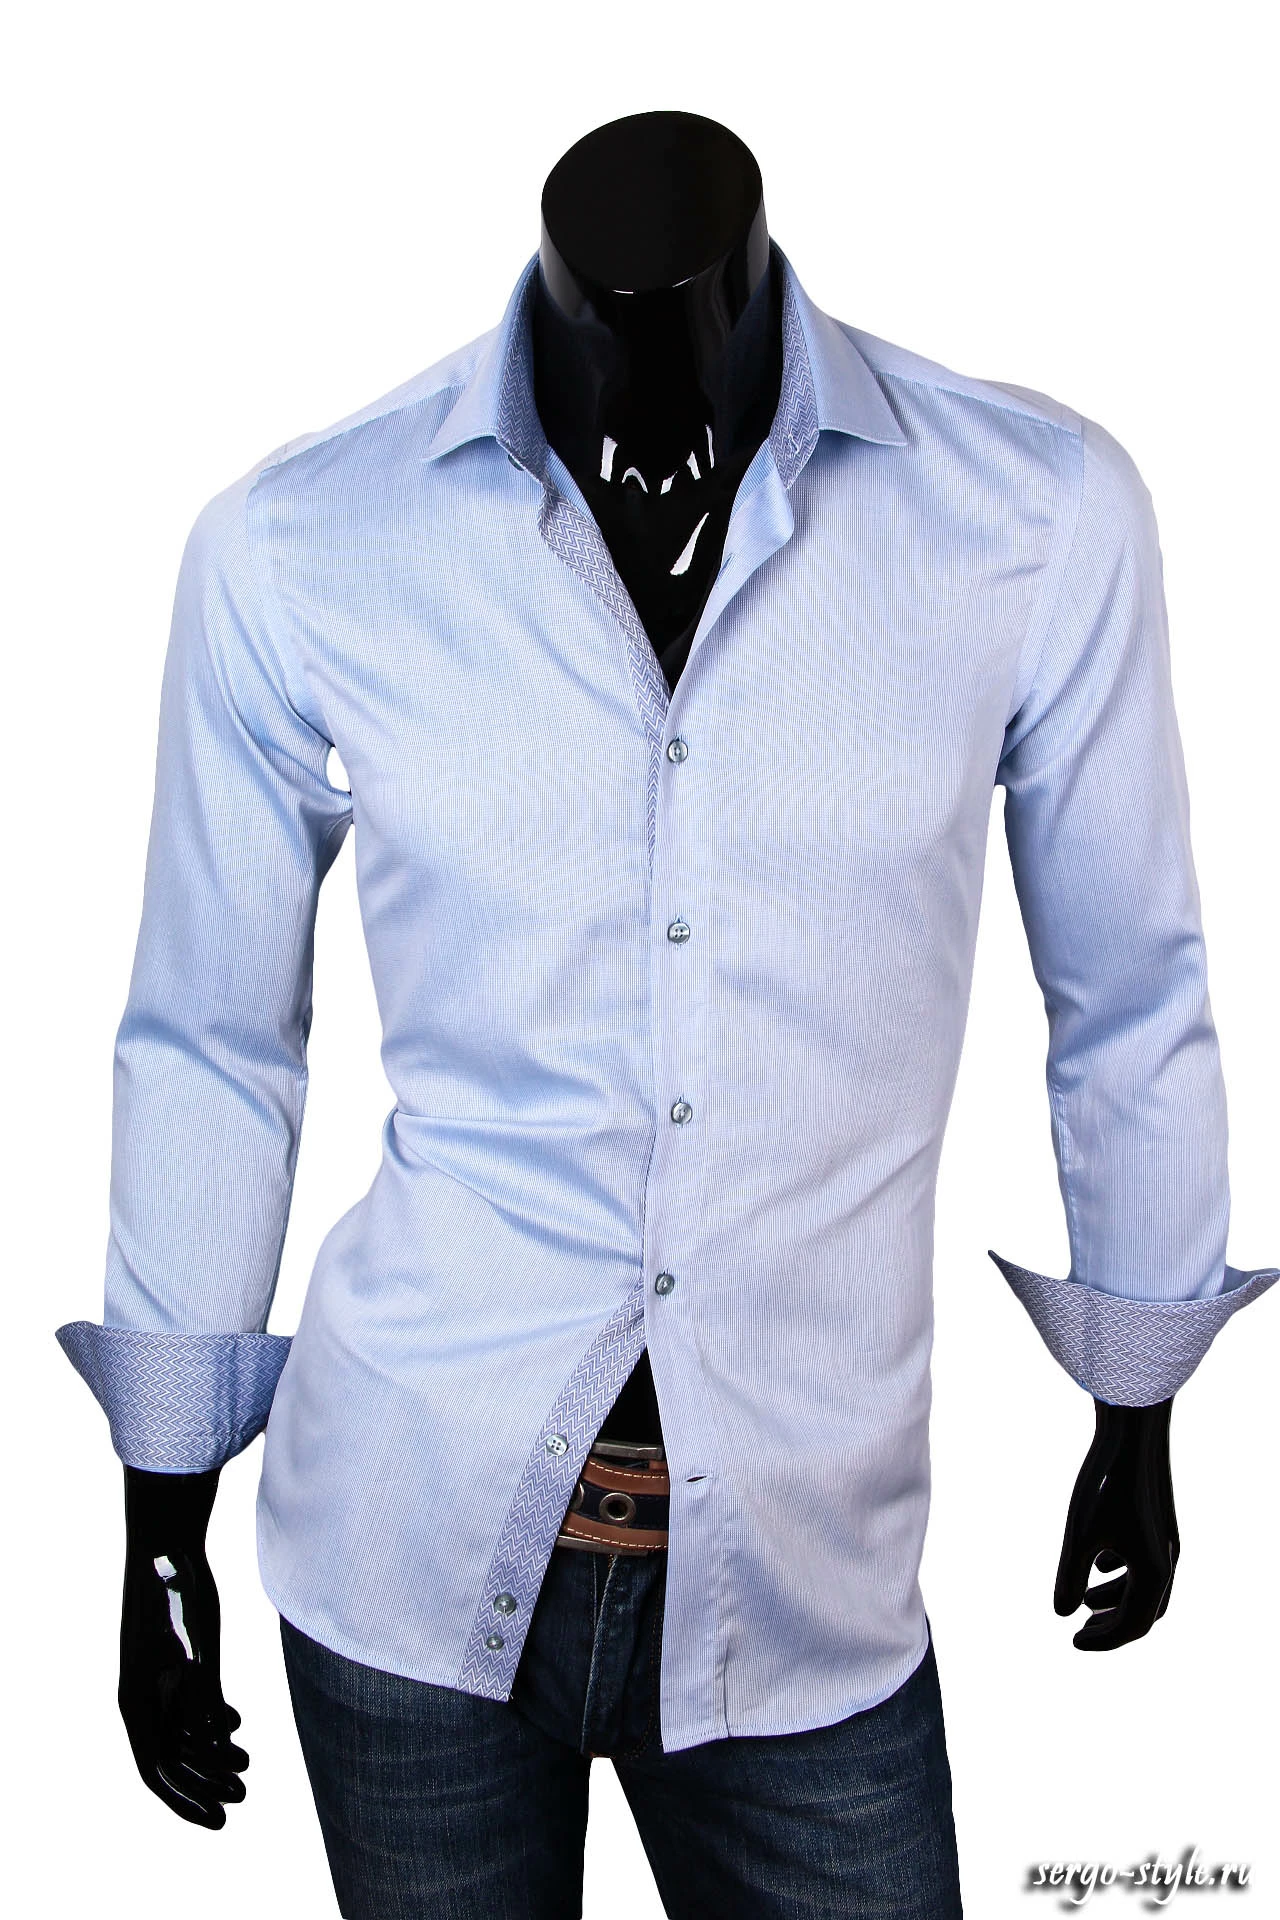 Приталенная мужская рубашка Venturo артикул 3200-03